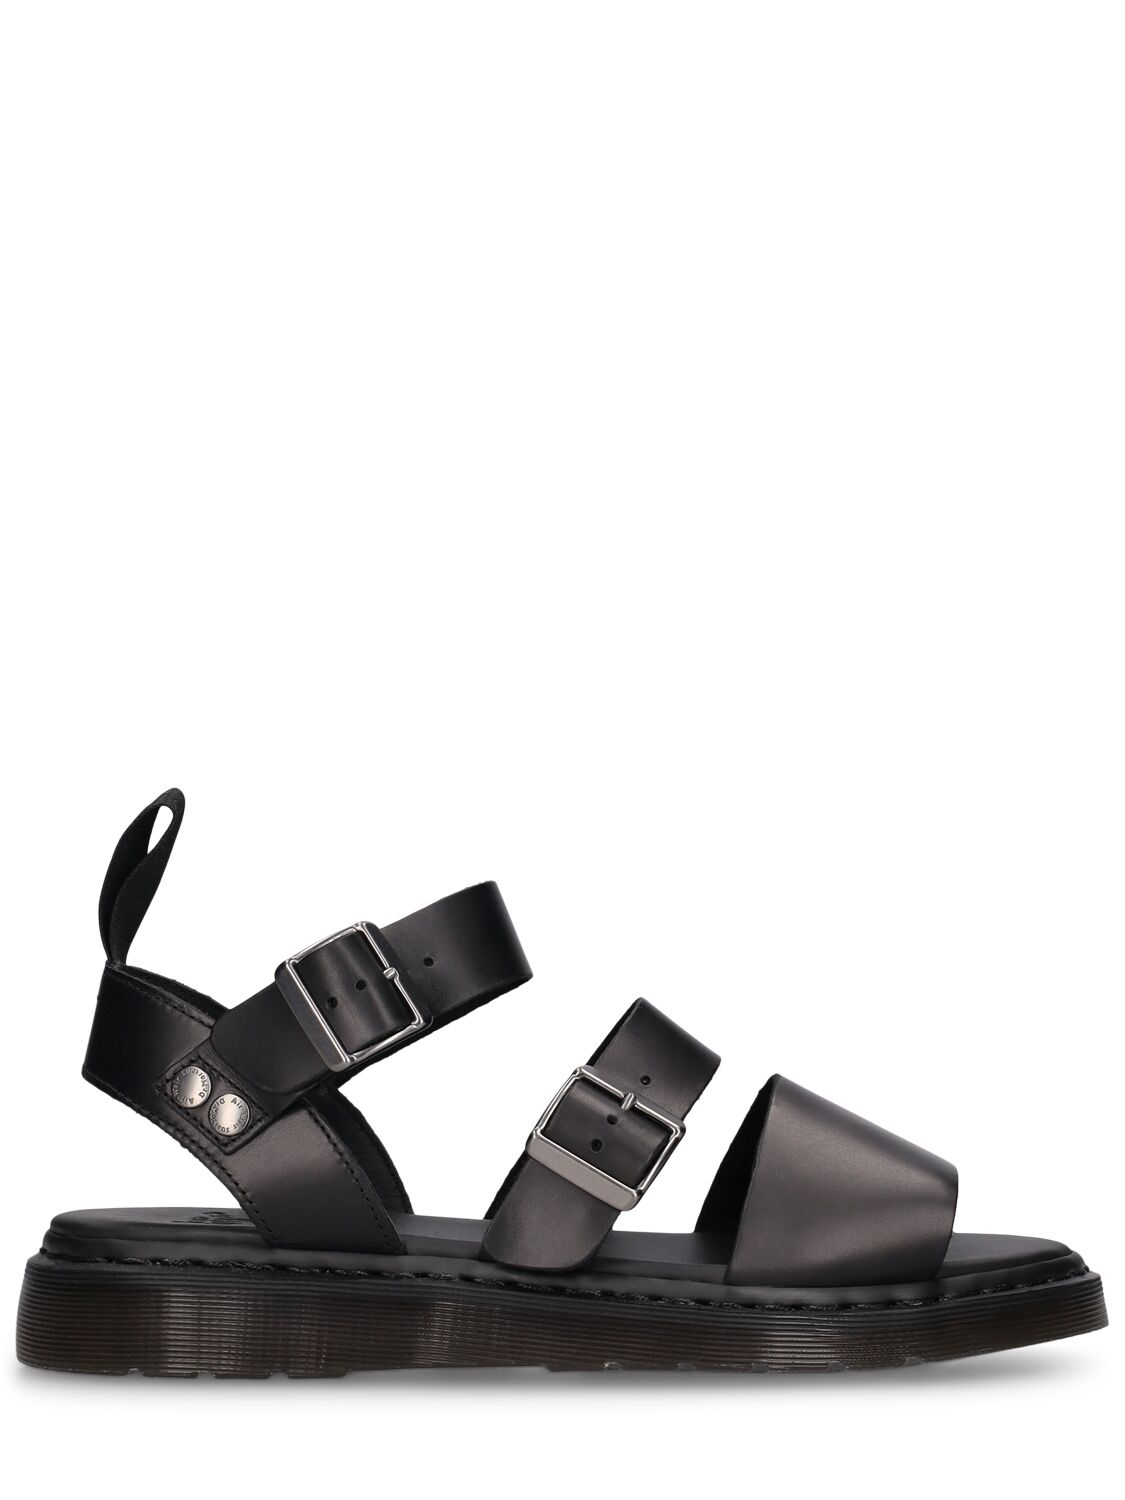 Dr. Martens Gryphon Leather Sandals In Black